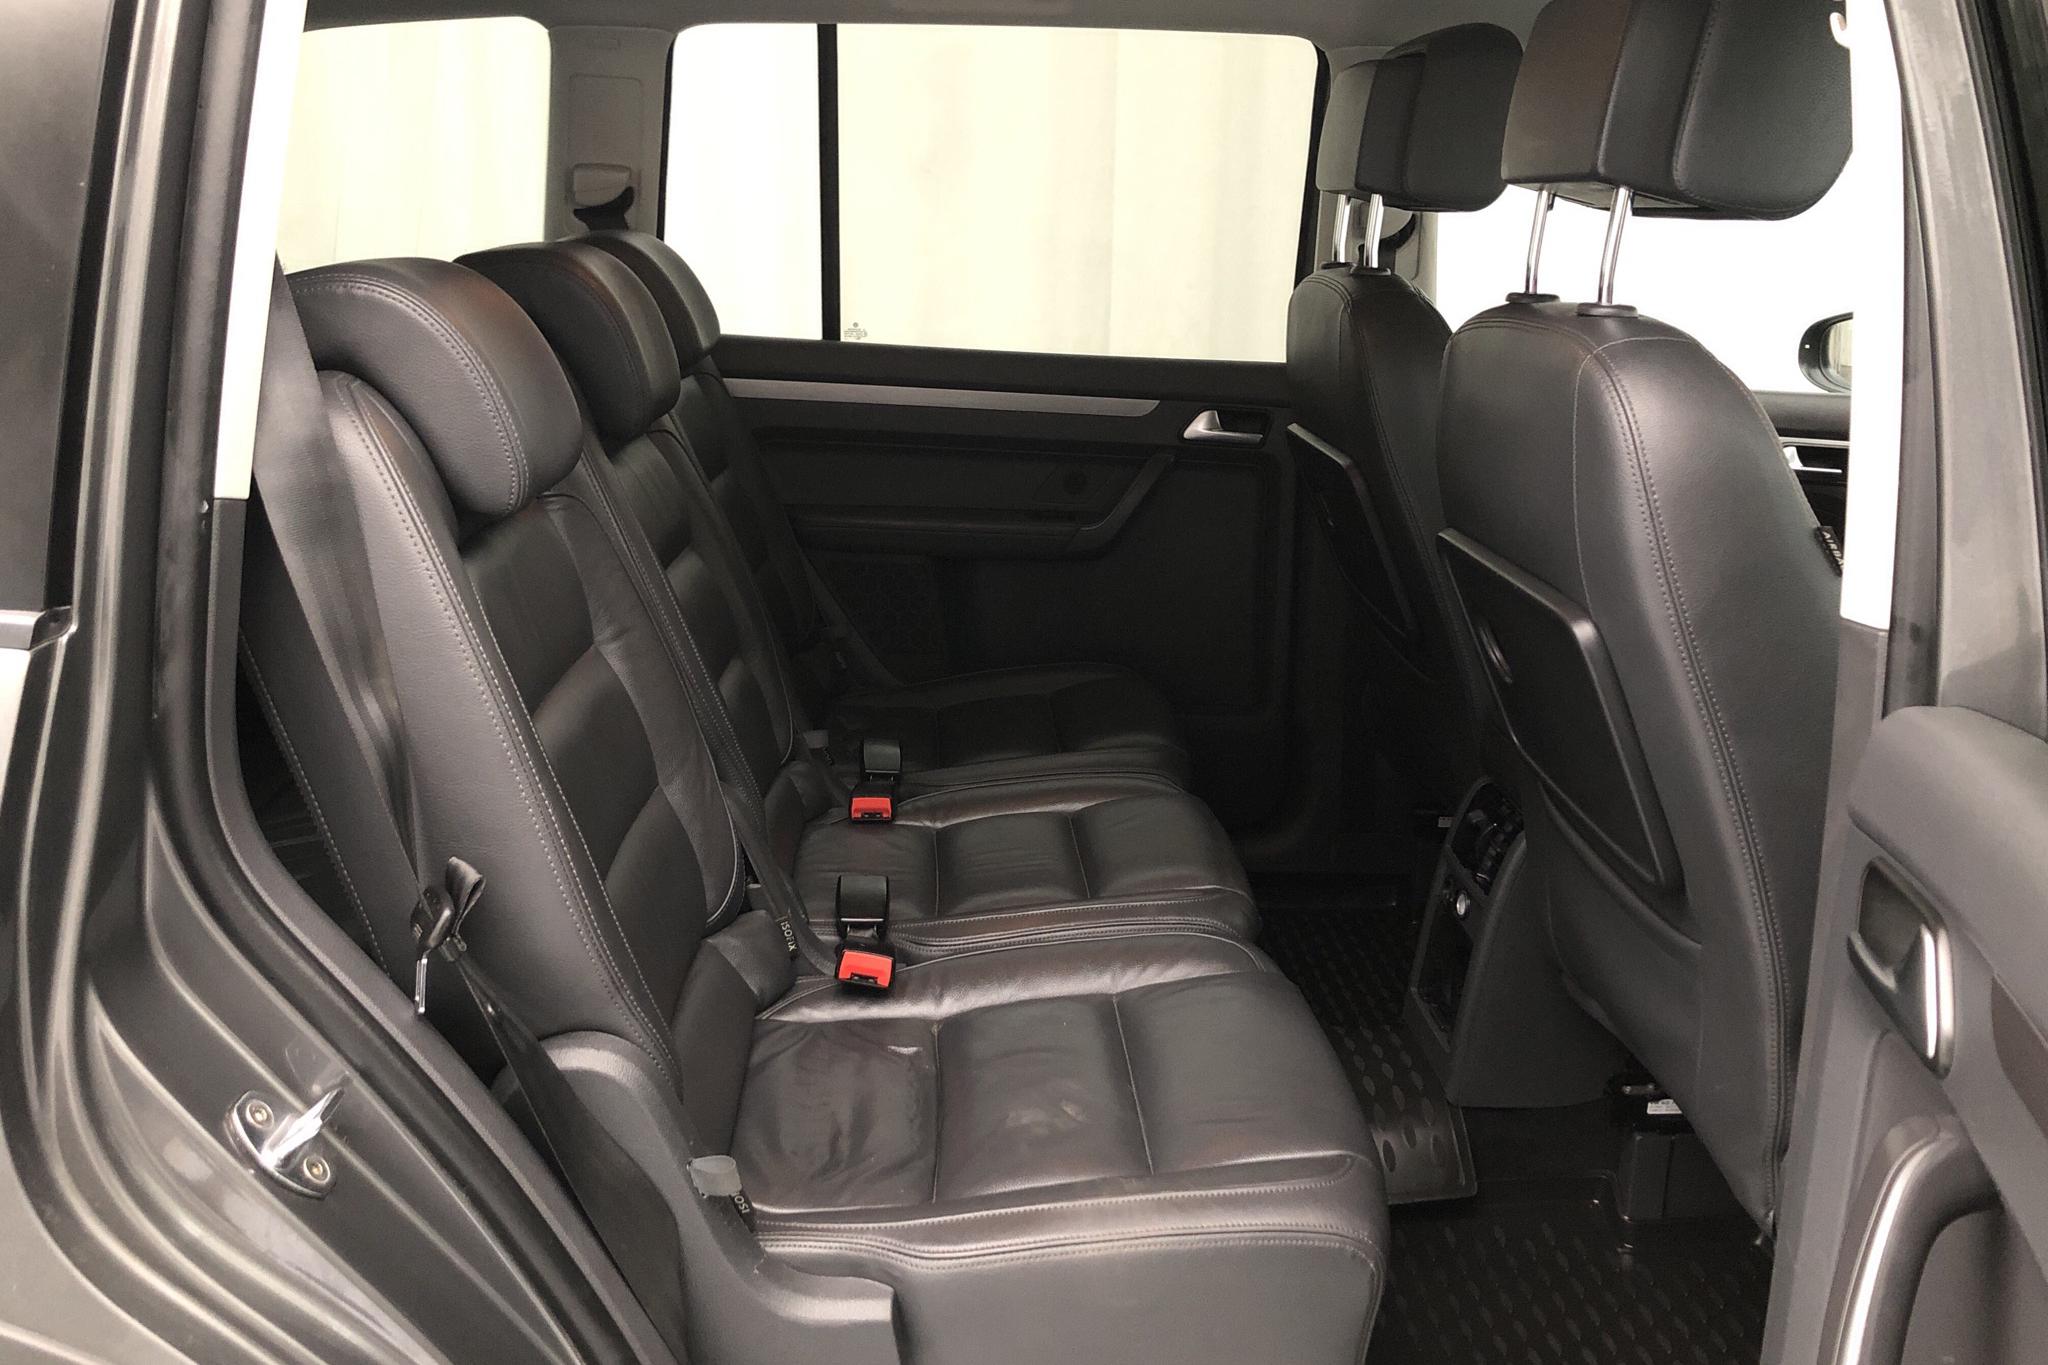 VW CrossTouran 1.4 TSI (140hk) - 14 560 mil - Manuell - Dark Grey - 2015